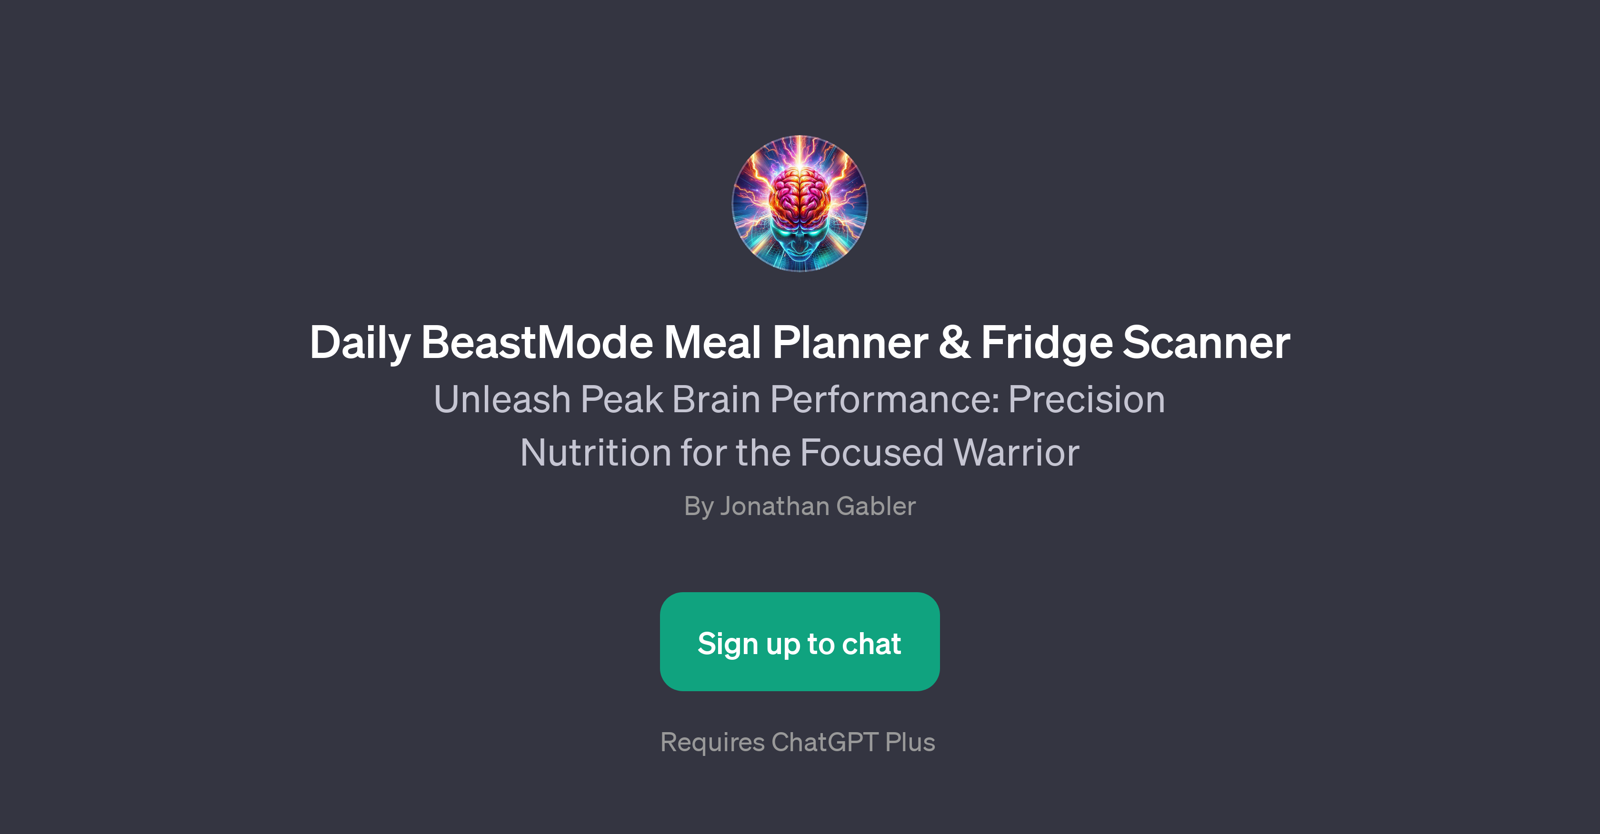 Daily BeastMode Meal Planner & Fridge Scanner website